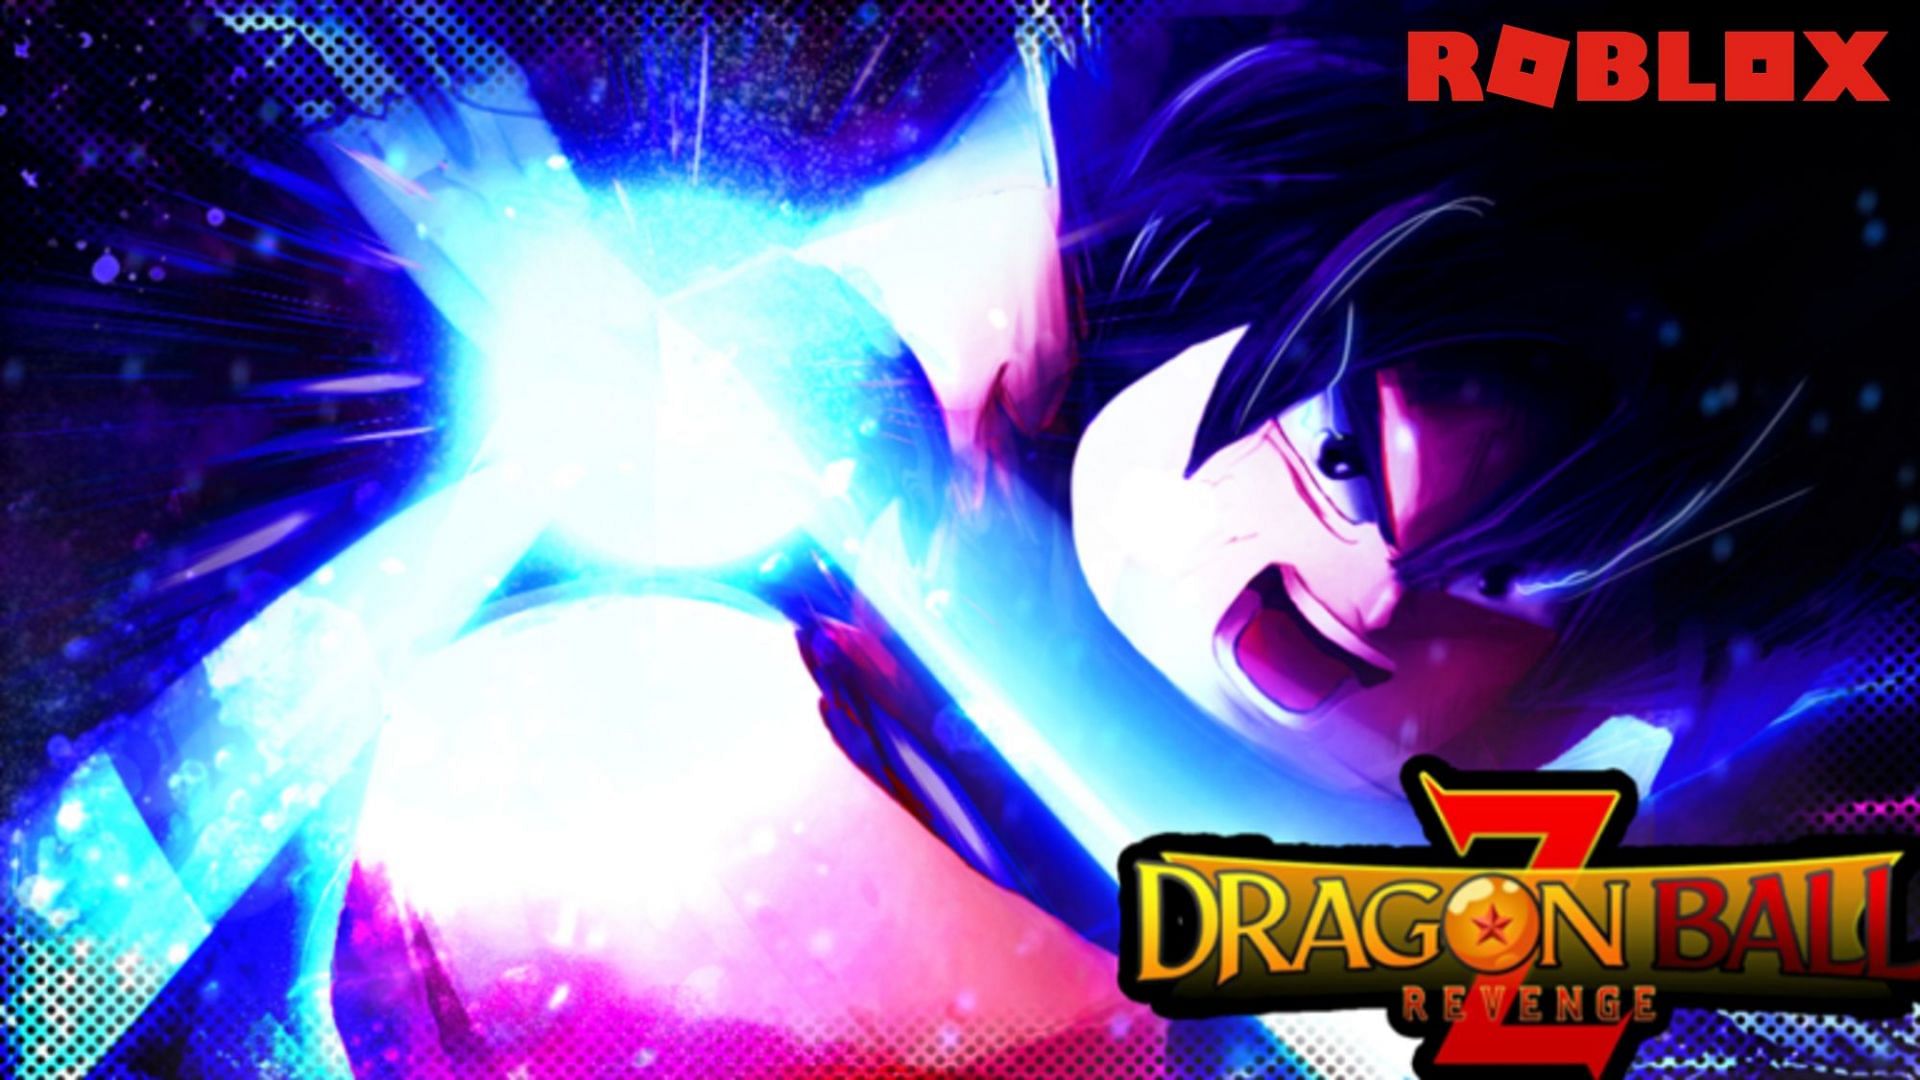 Codes to redeem free rewards in Roblox Dragon Ball Revenge (Image via Roblox)